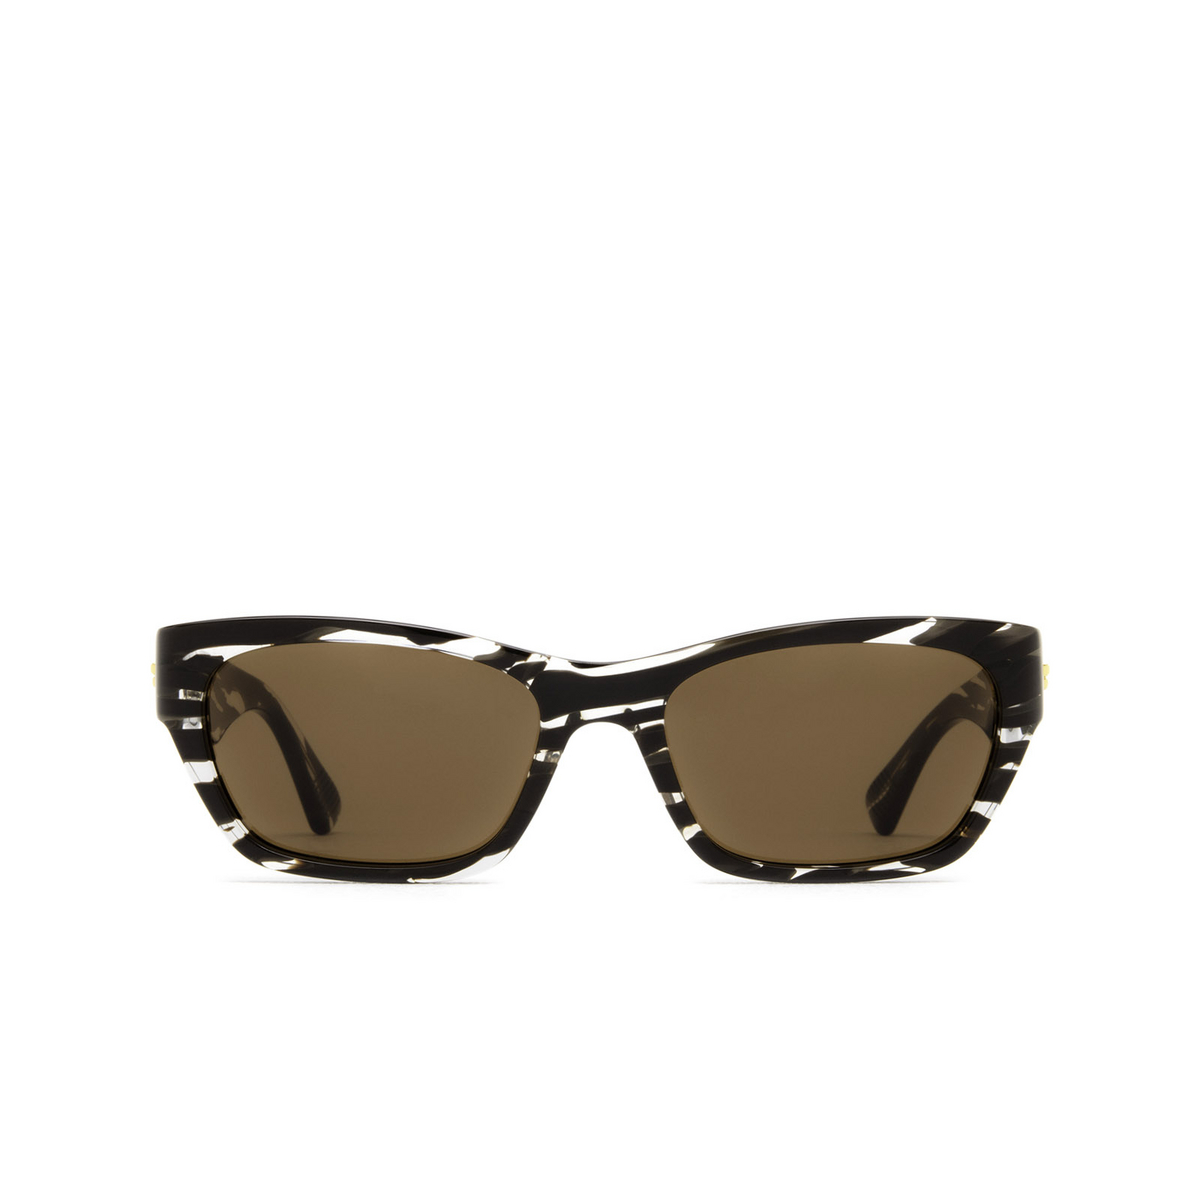 Bottega Veneta® Cat-eye Sunglasses: BV1143S color Brown 003 - front view.